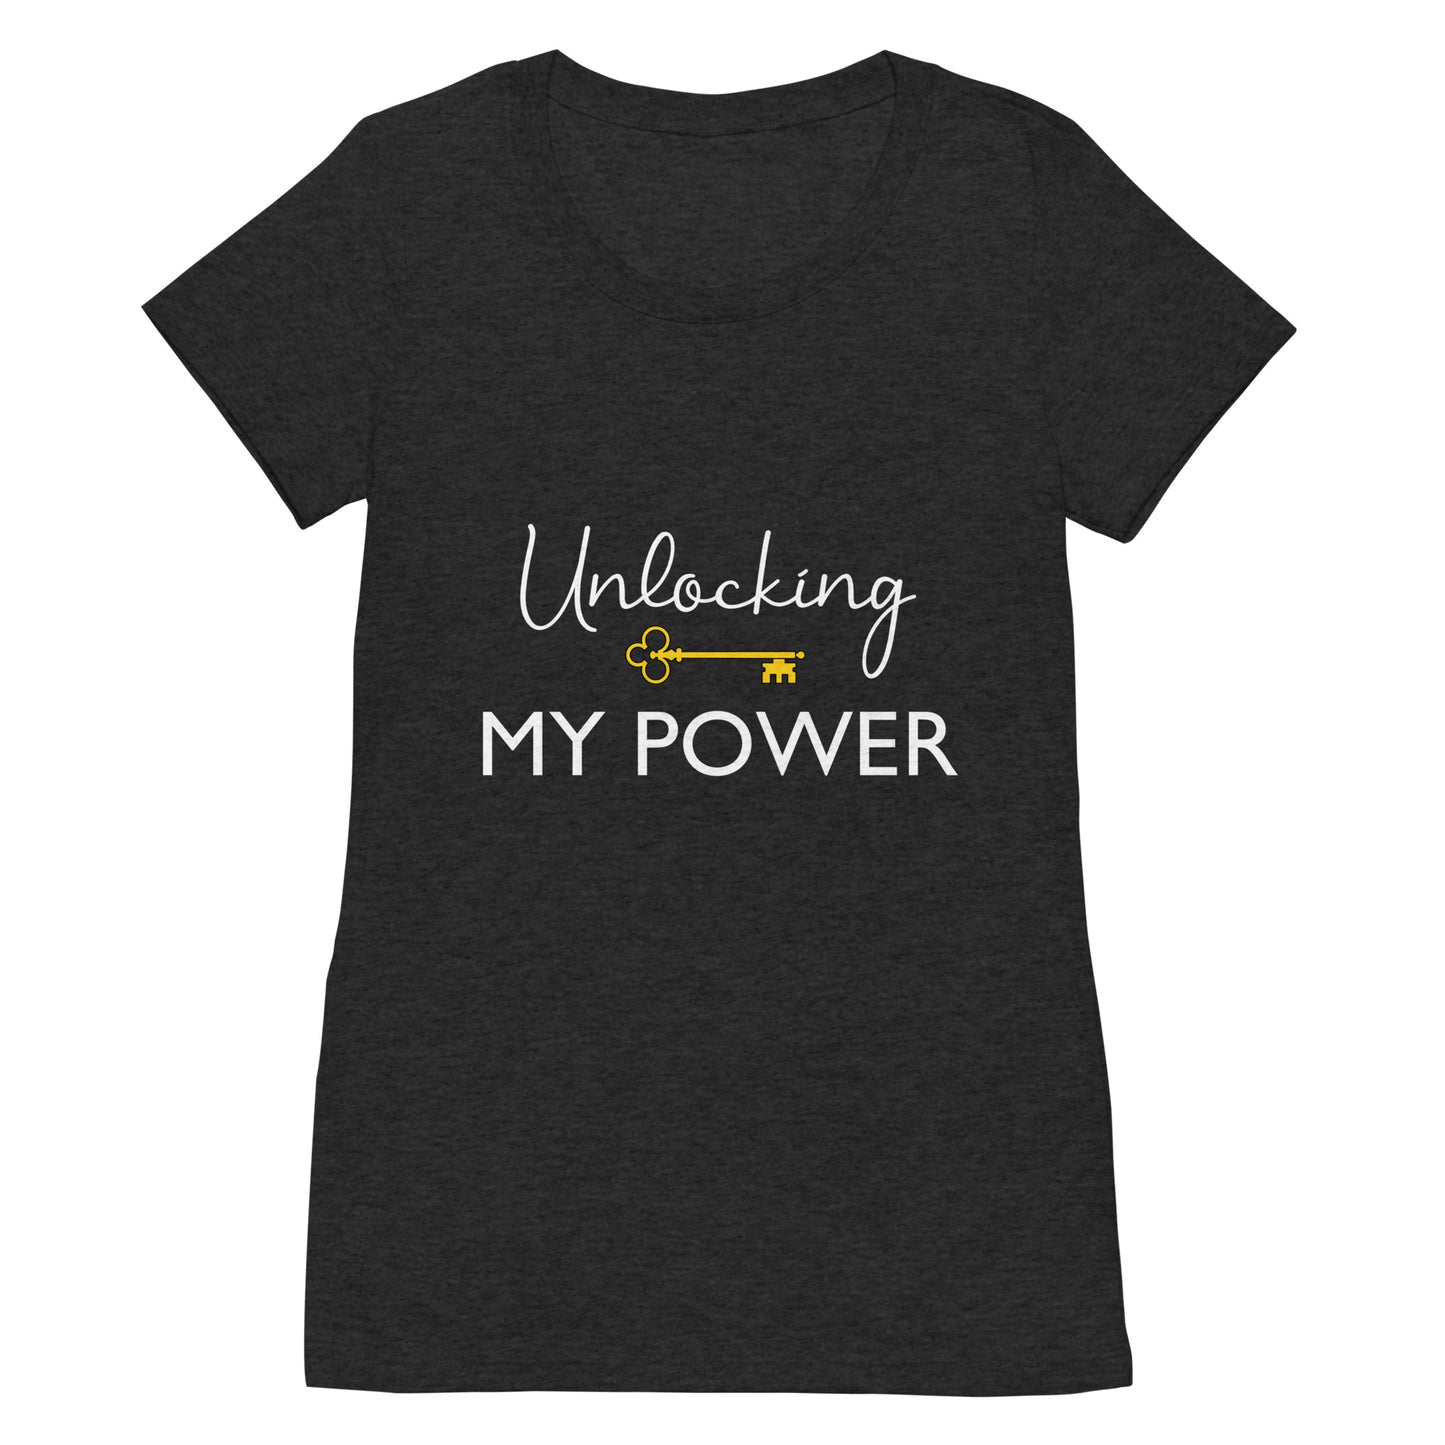 Unlocking MY POWER Ladies' short sleeve t-shirt